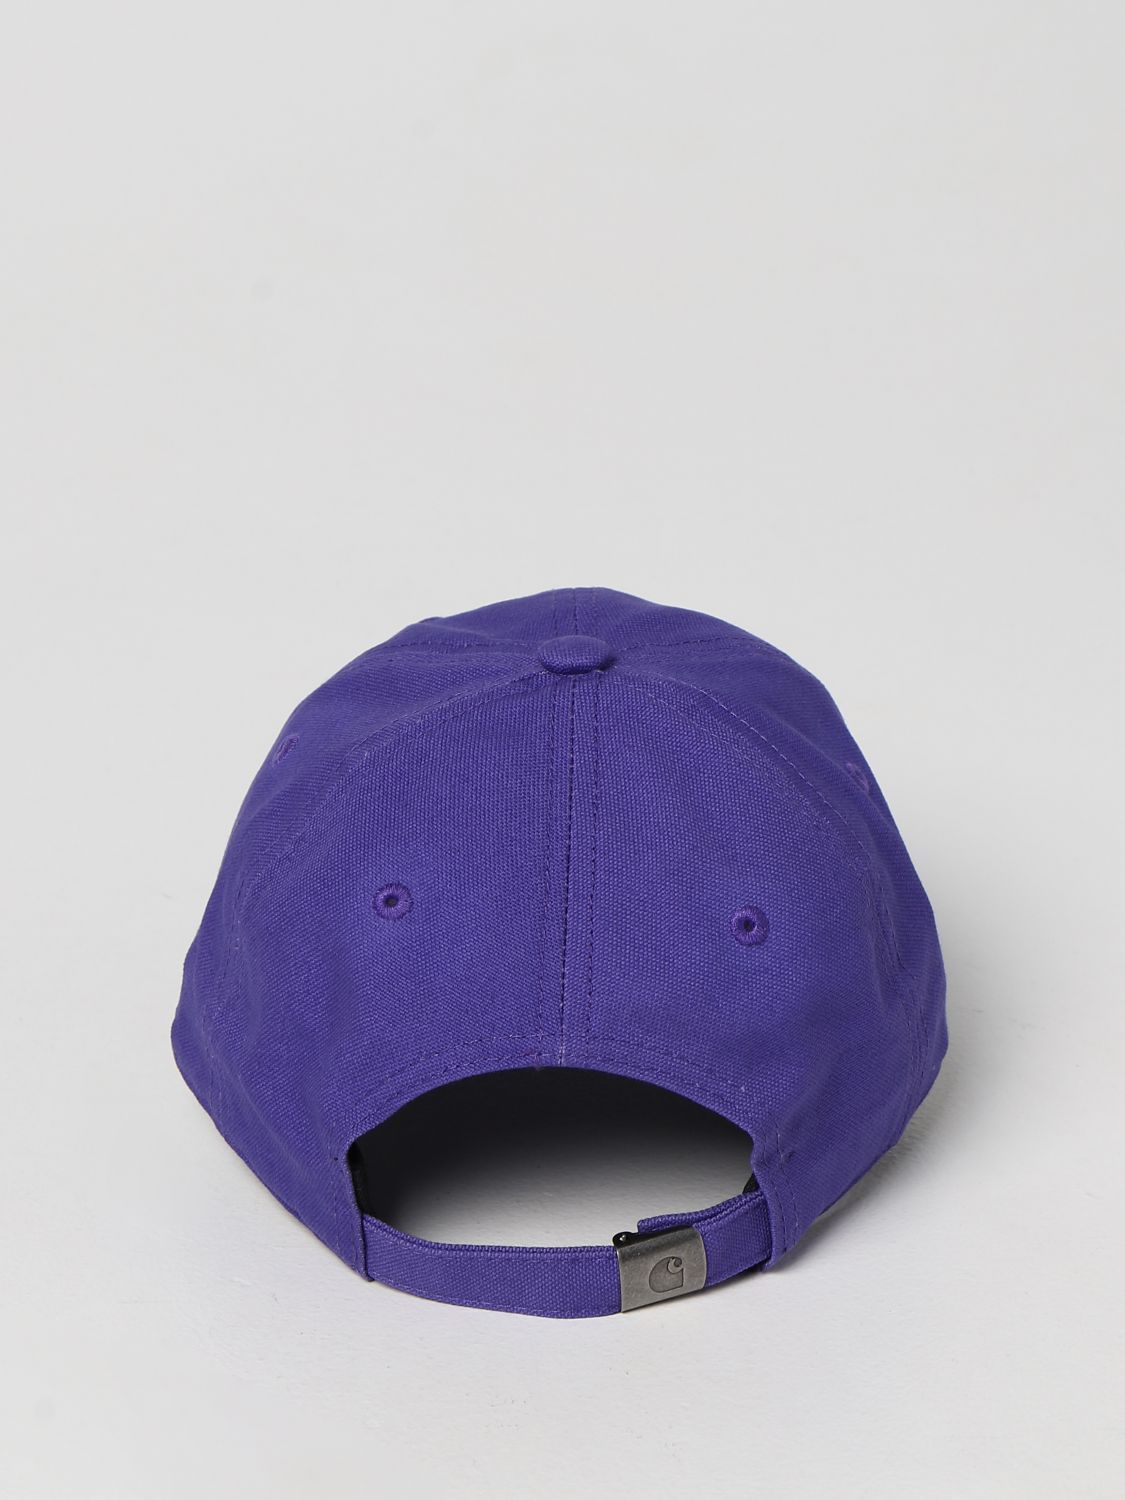 Carhartt Wip Carhartt Wip帽子男士 紫色 Carhartt Wip帽子i0276在线就在giglio Com